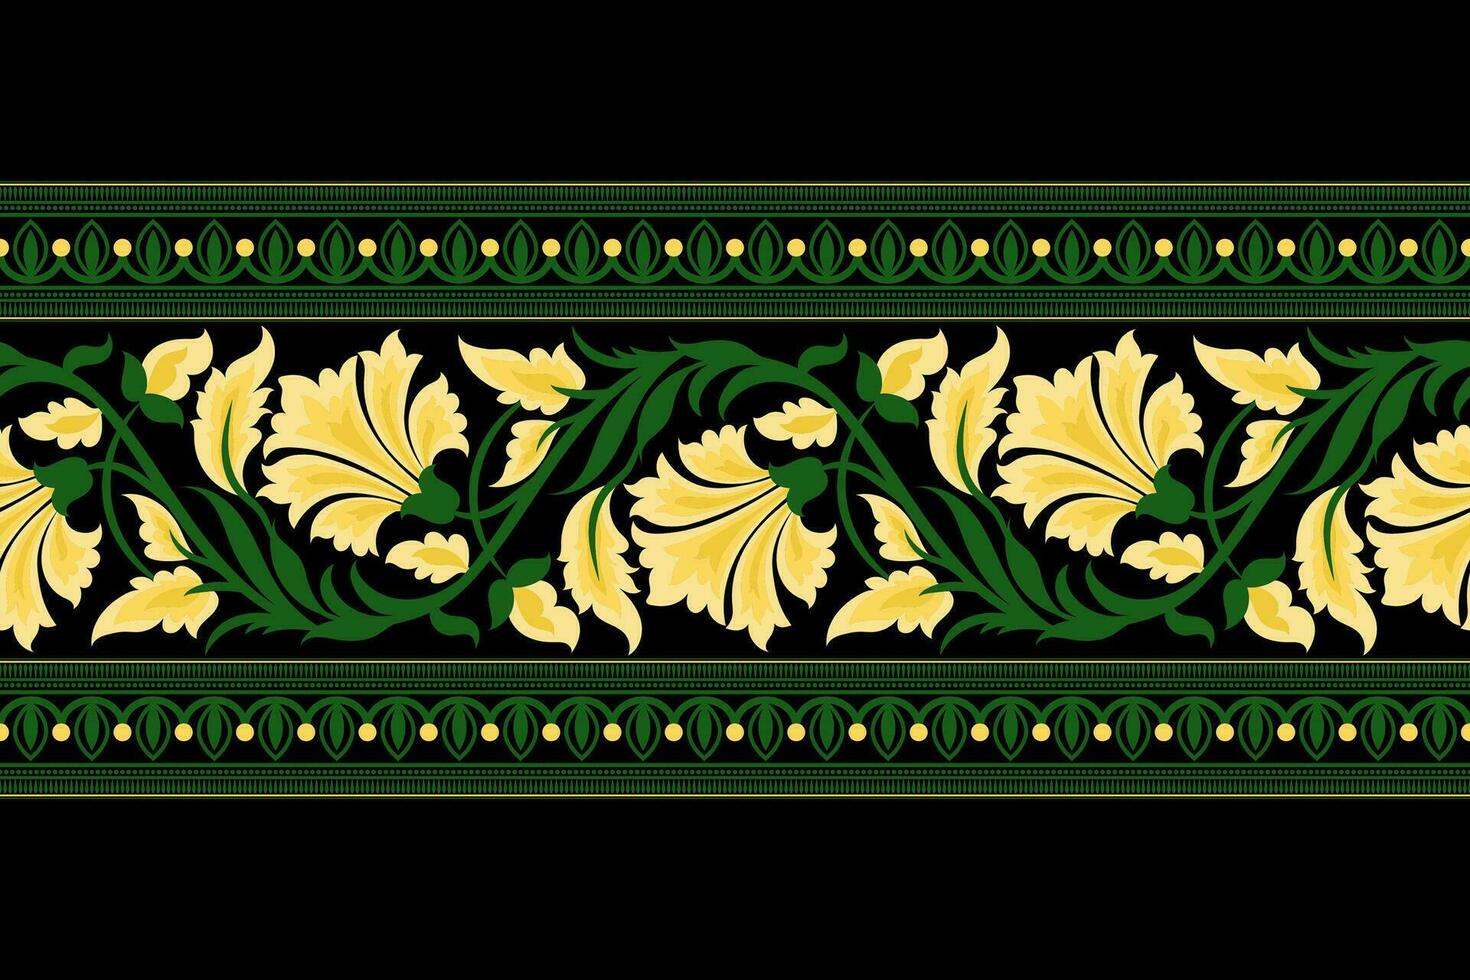 Botanical Seamless. Background Seamless Pattern Geometric Ethnic pattern design  for background, carpet, wallpaper, clothing, wrapping, Batik, fabric, printing textile illustration. vector